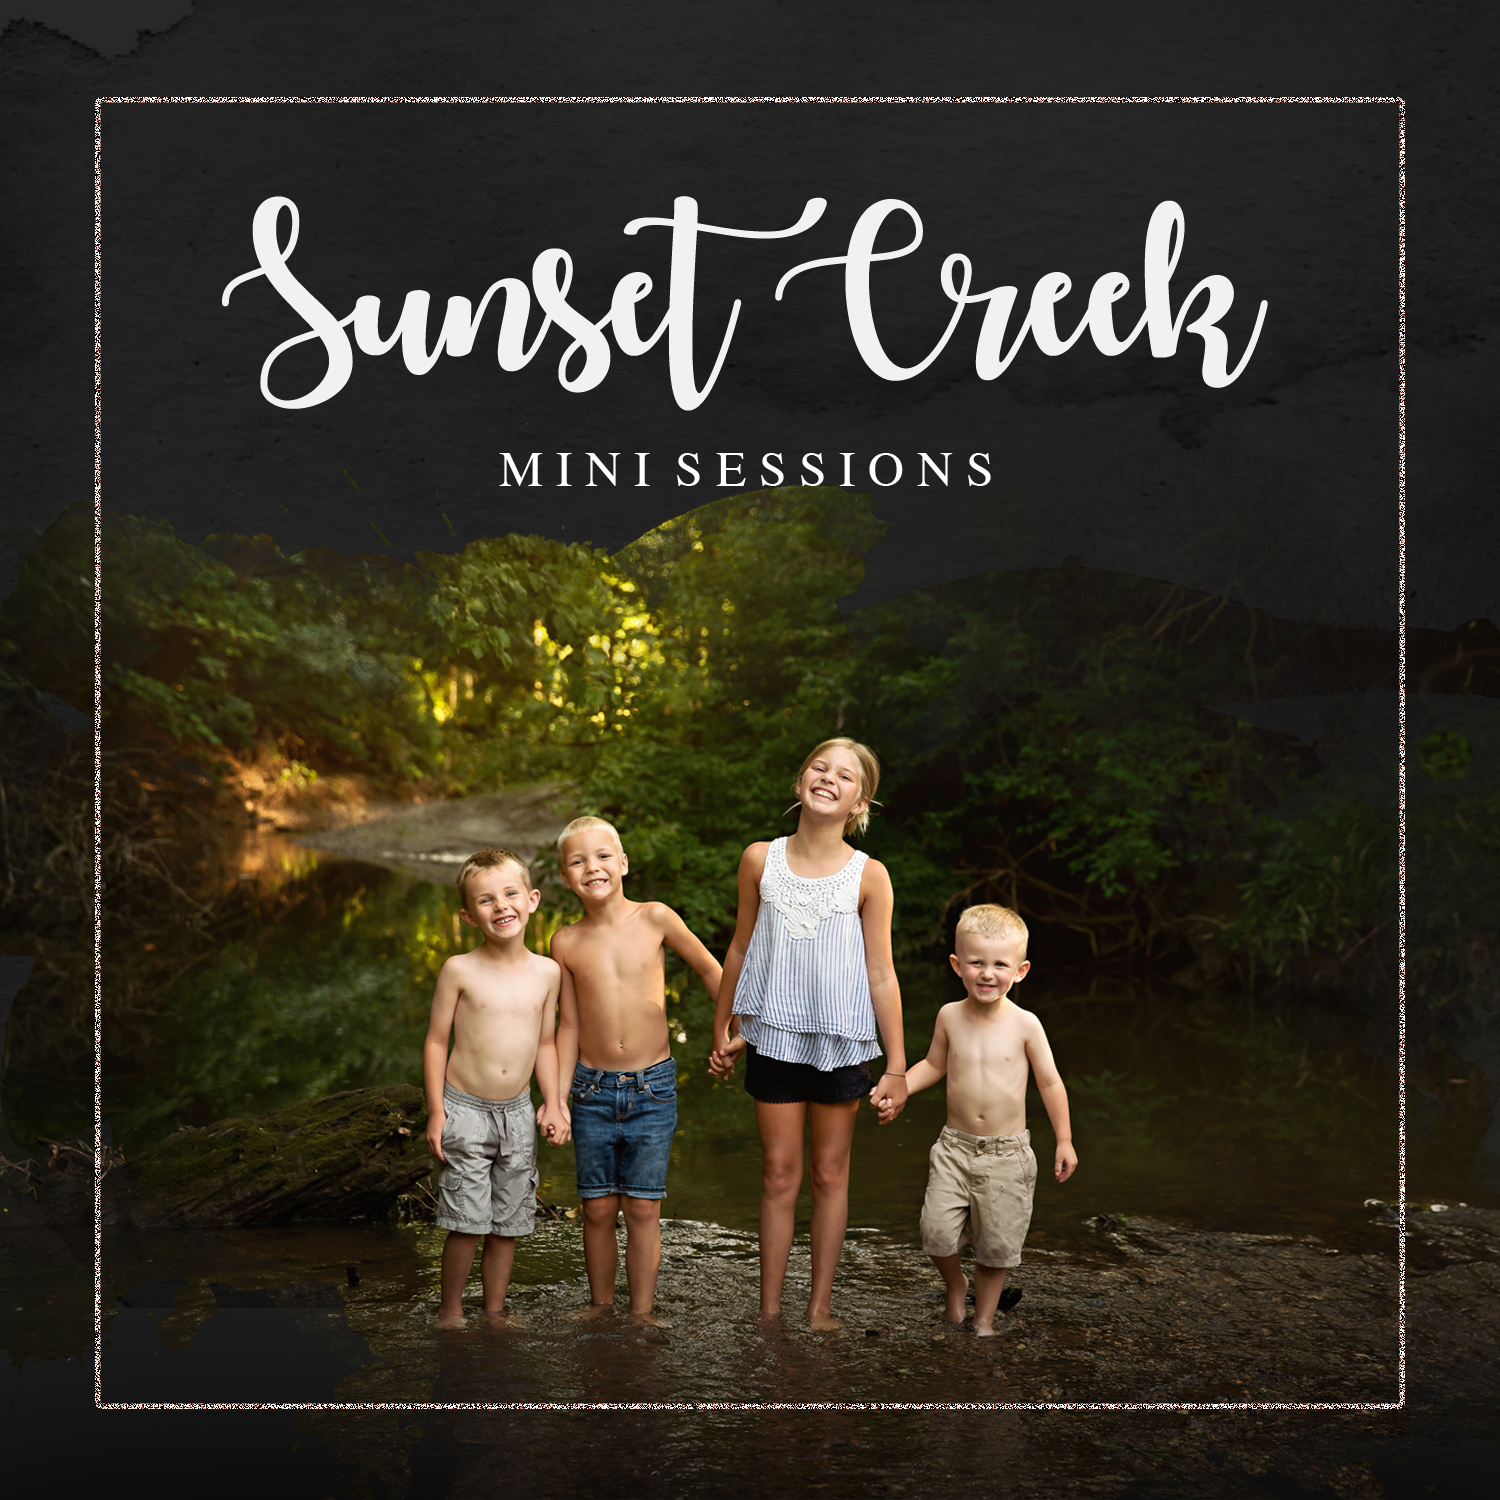 Coming Soon – Sunset Creek Mini Sessions